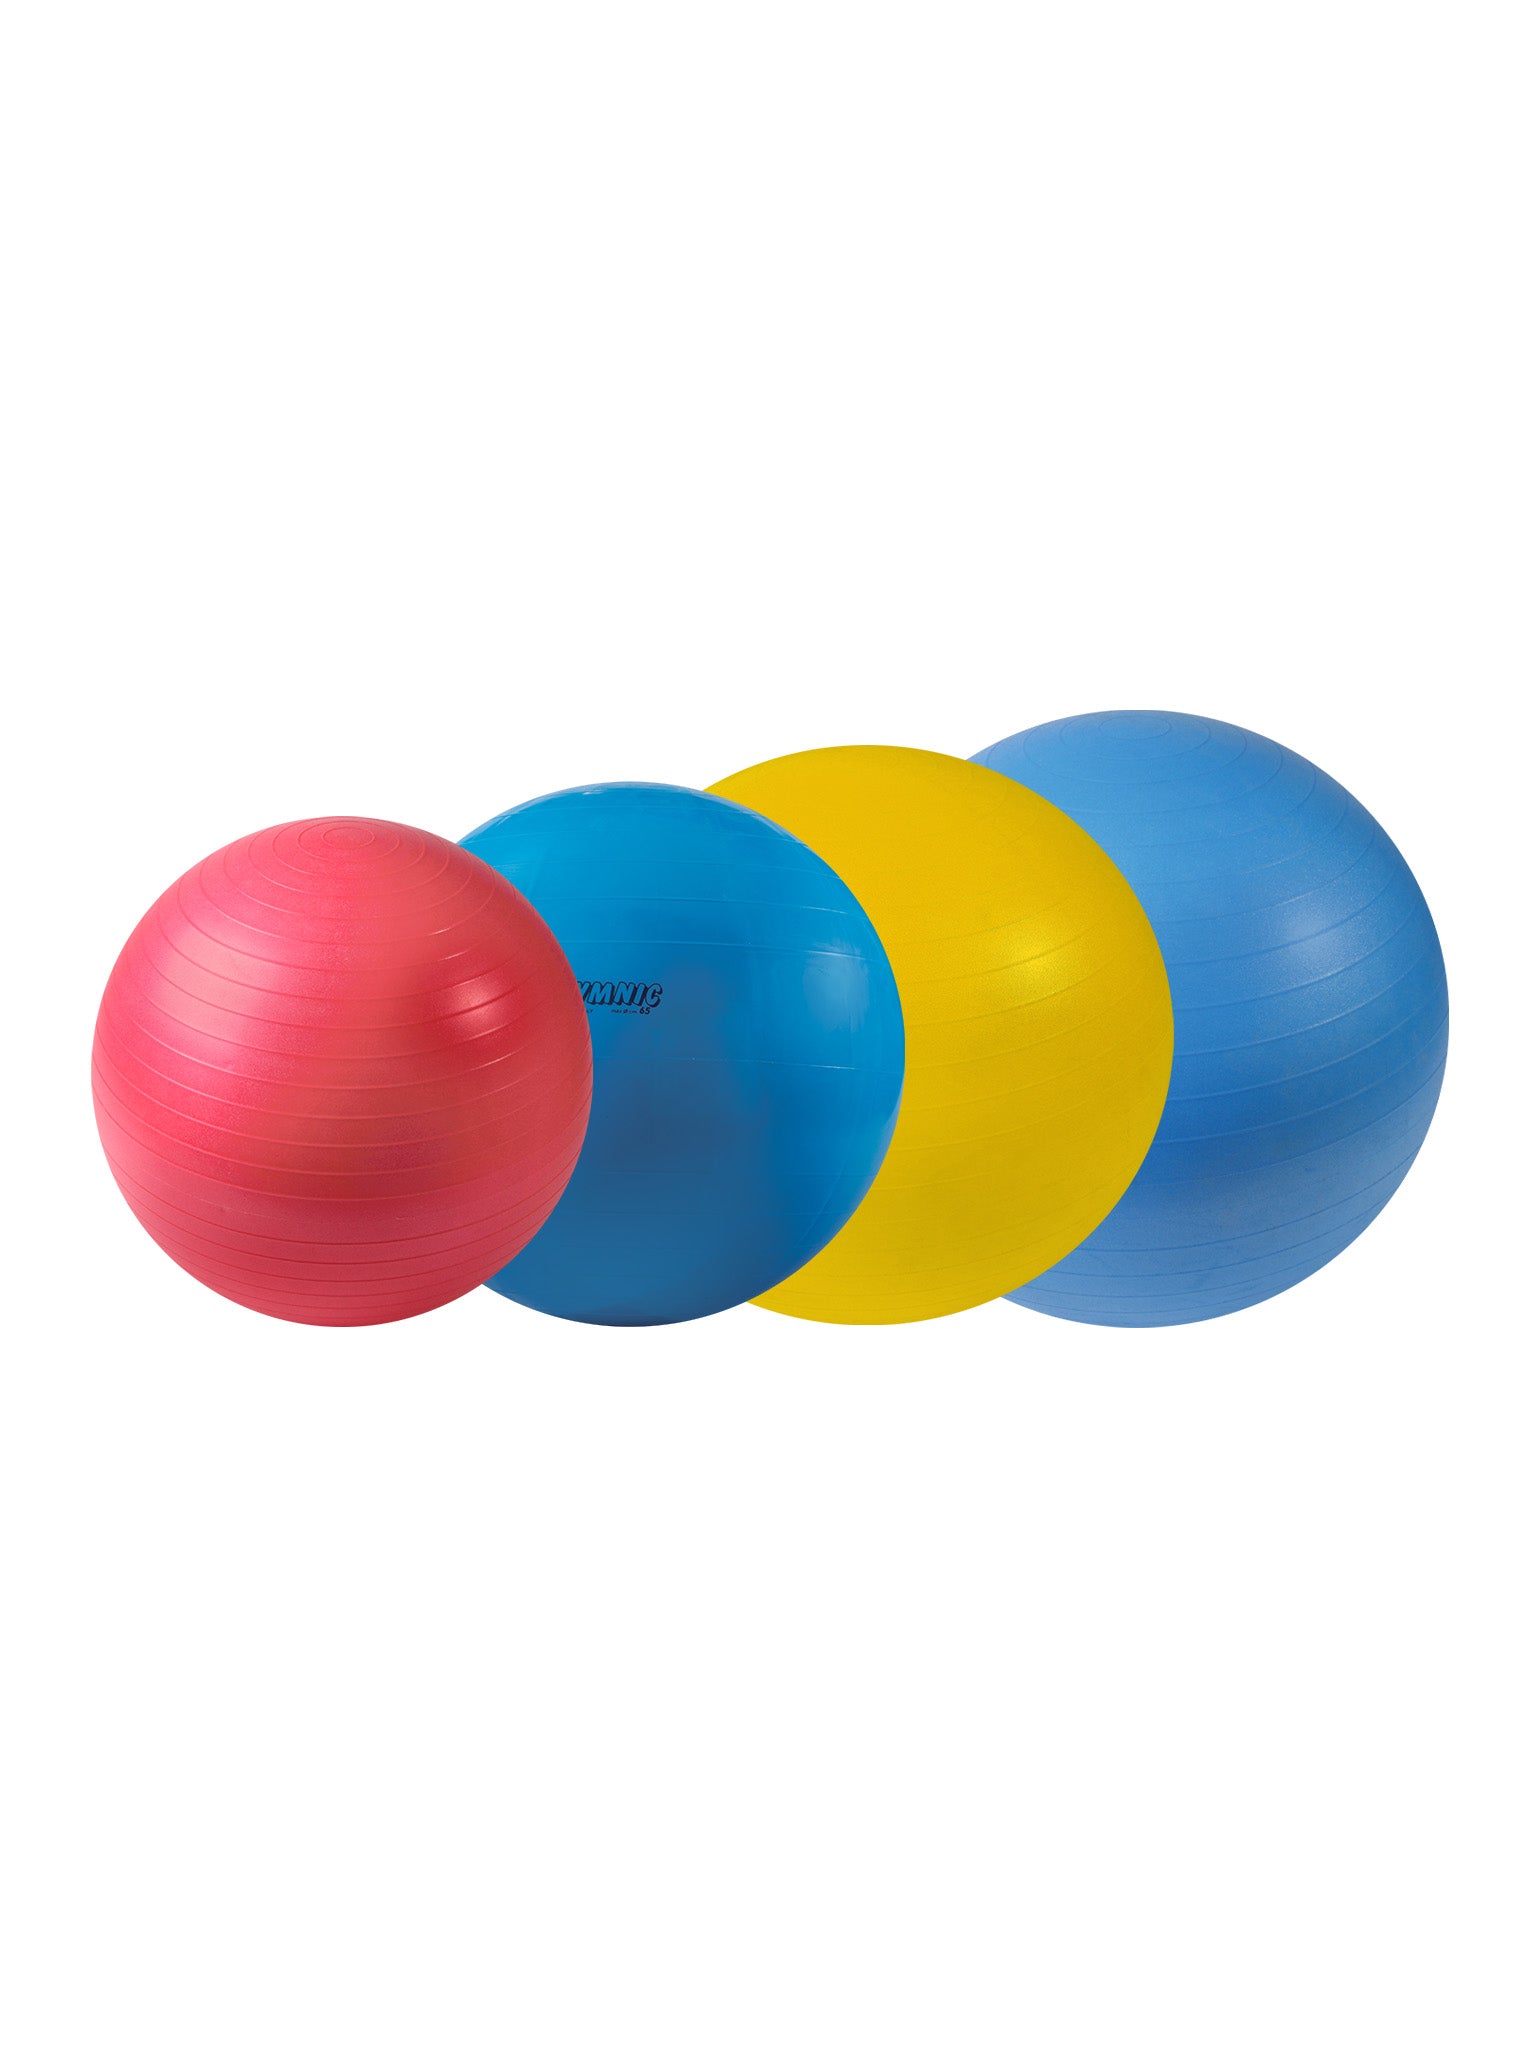 360 Athletics Core Fitness Balls